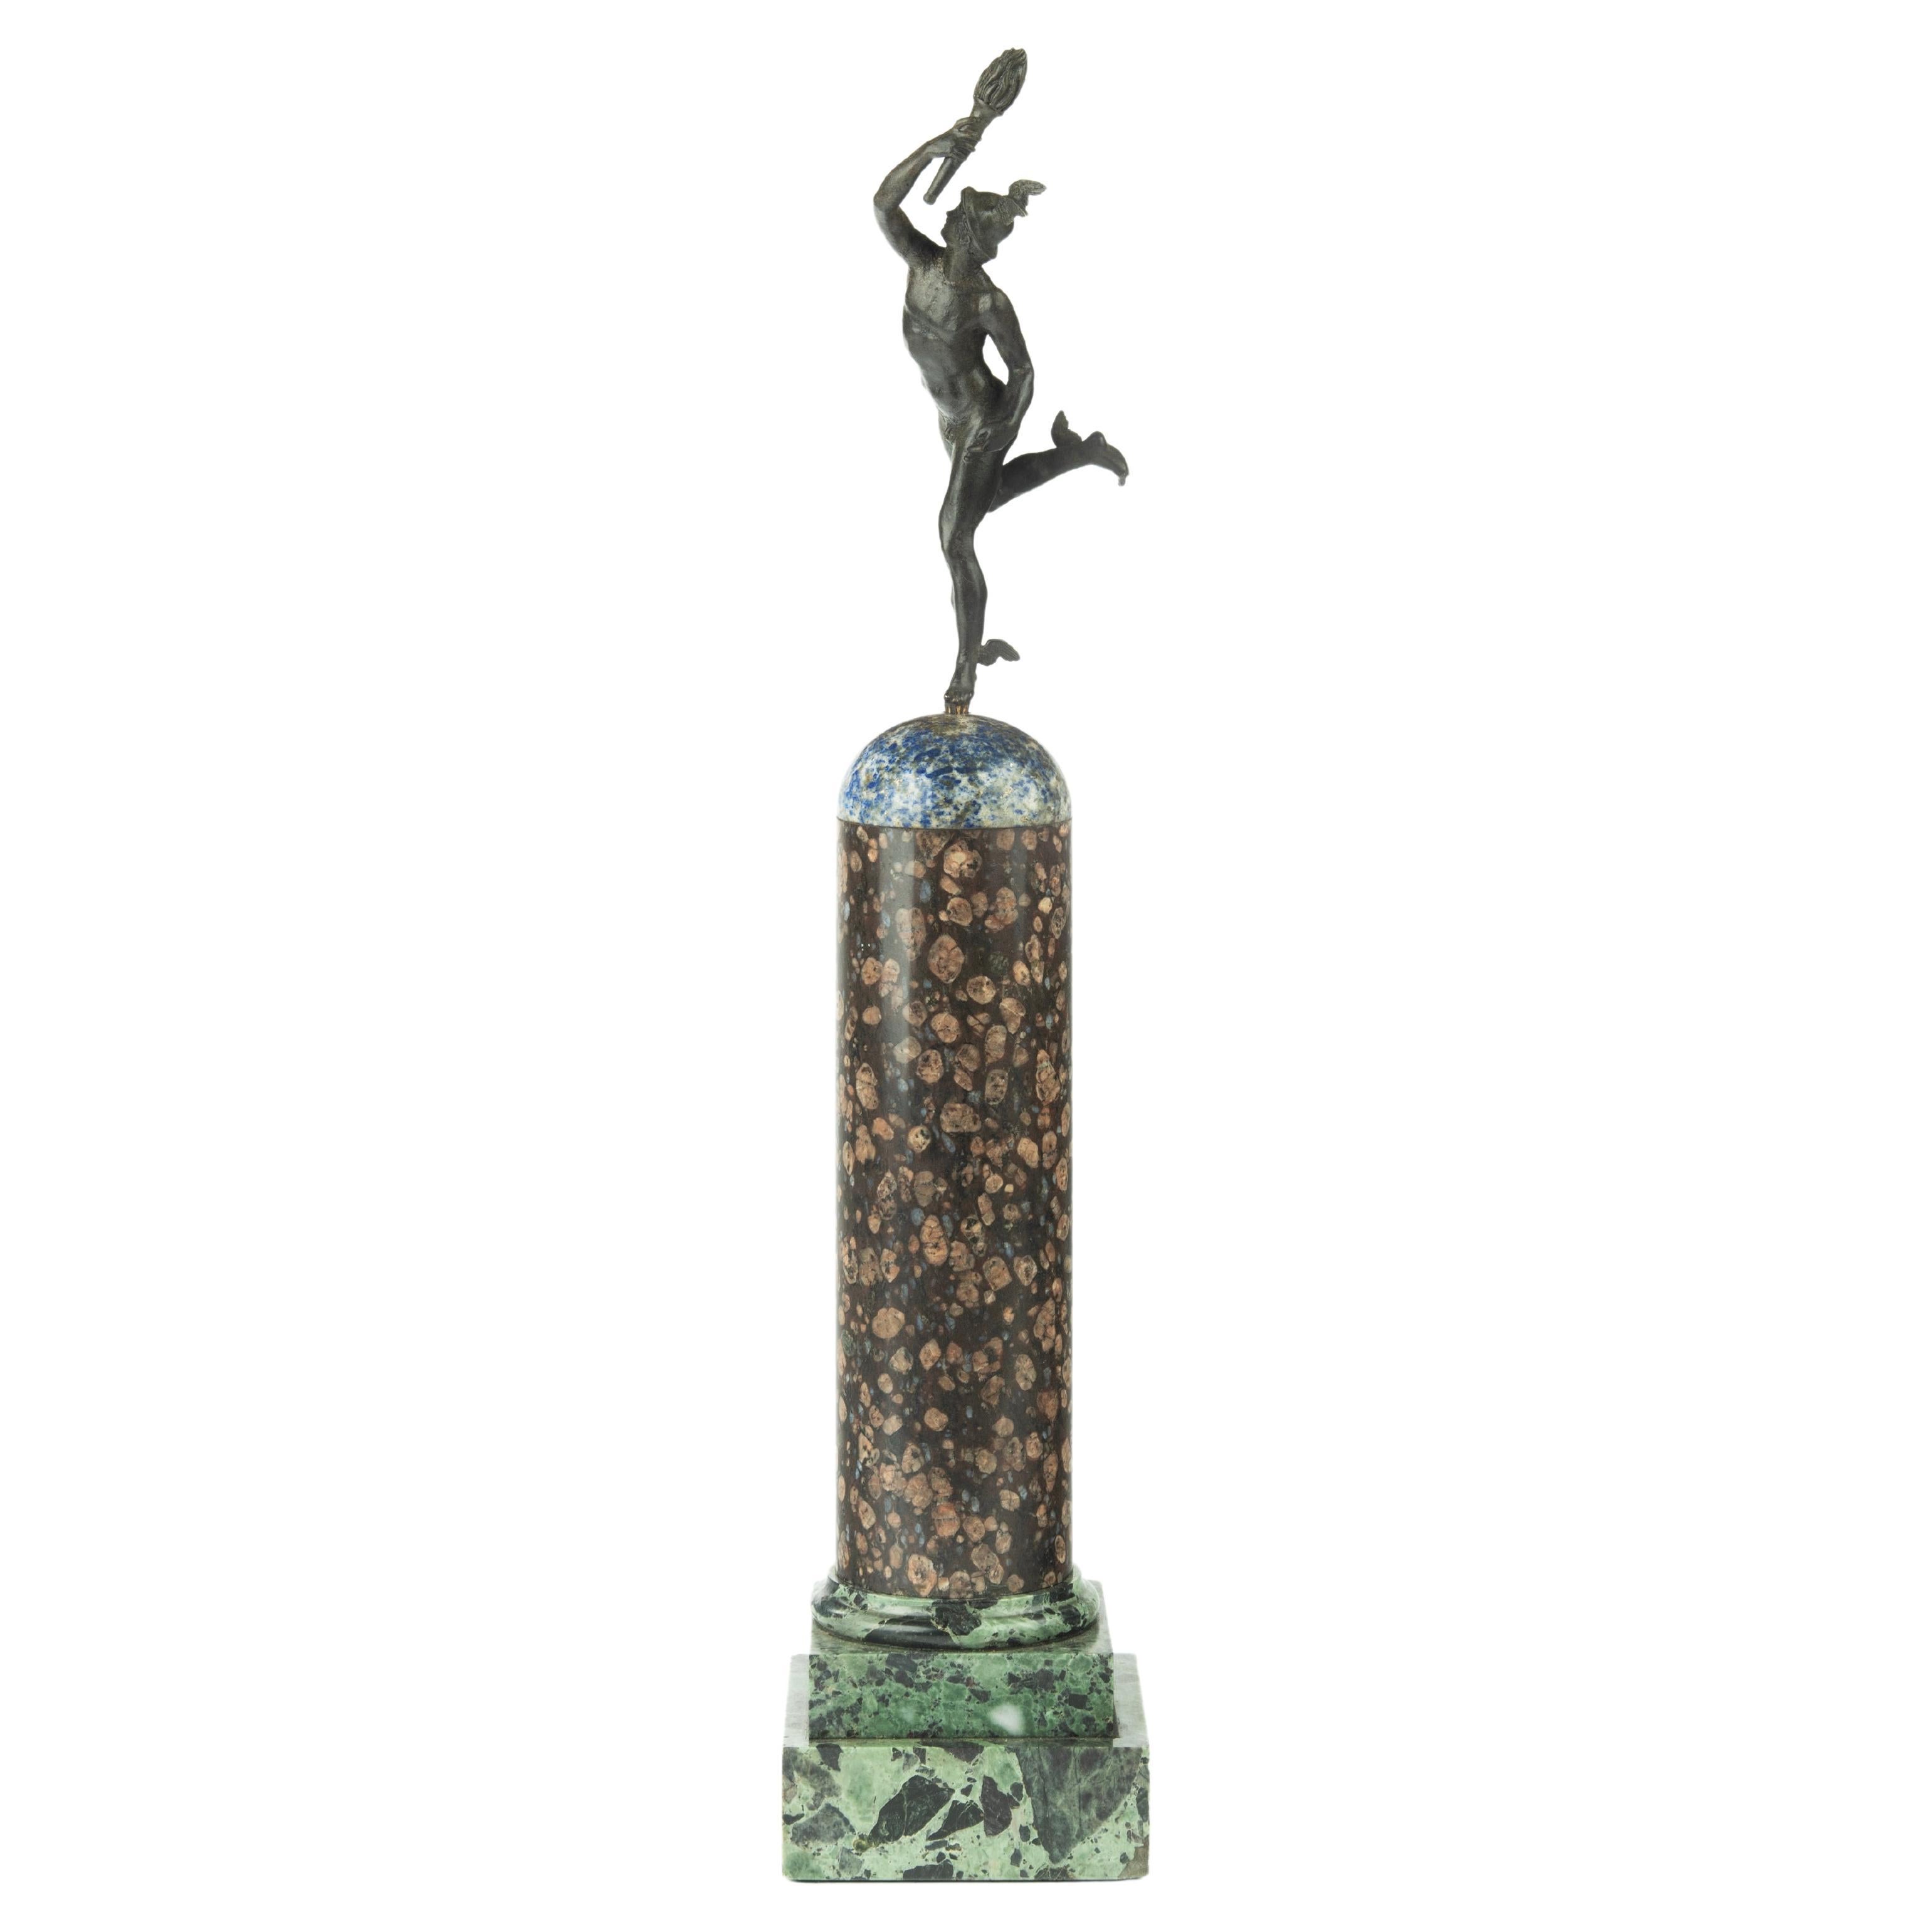 A Grand Tour Regency bronze figure of Mercury (Hermes) on a marble column